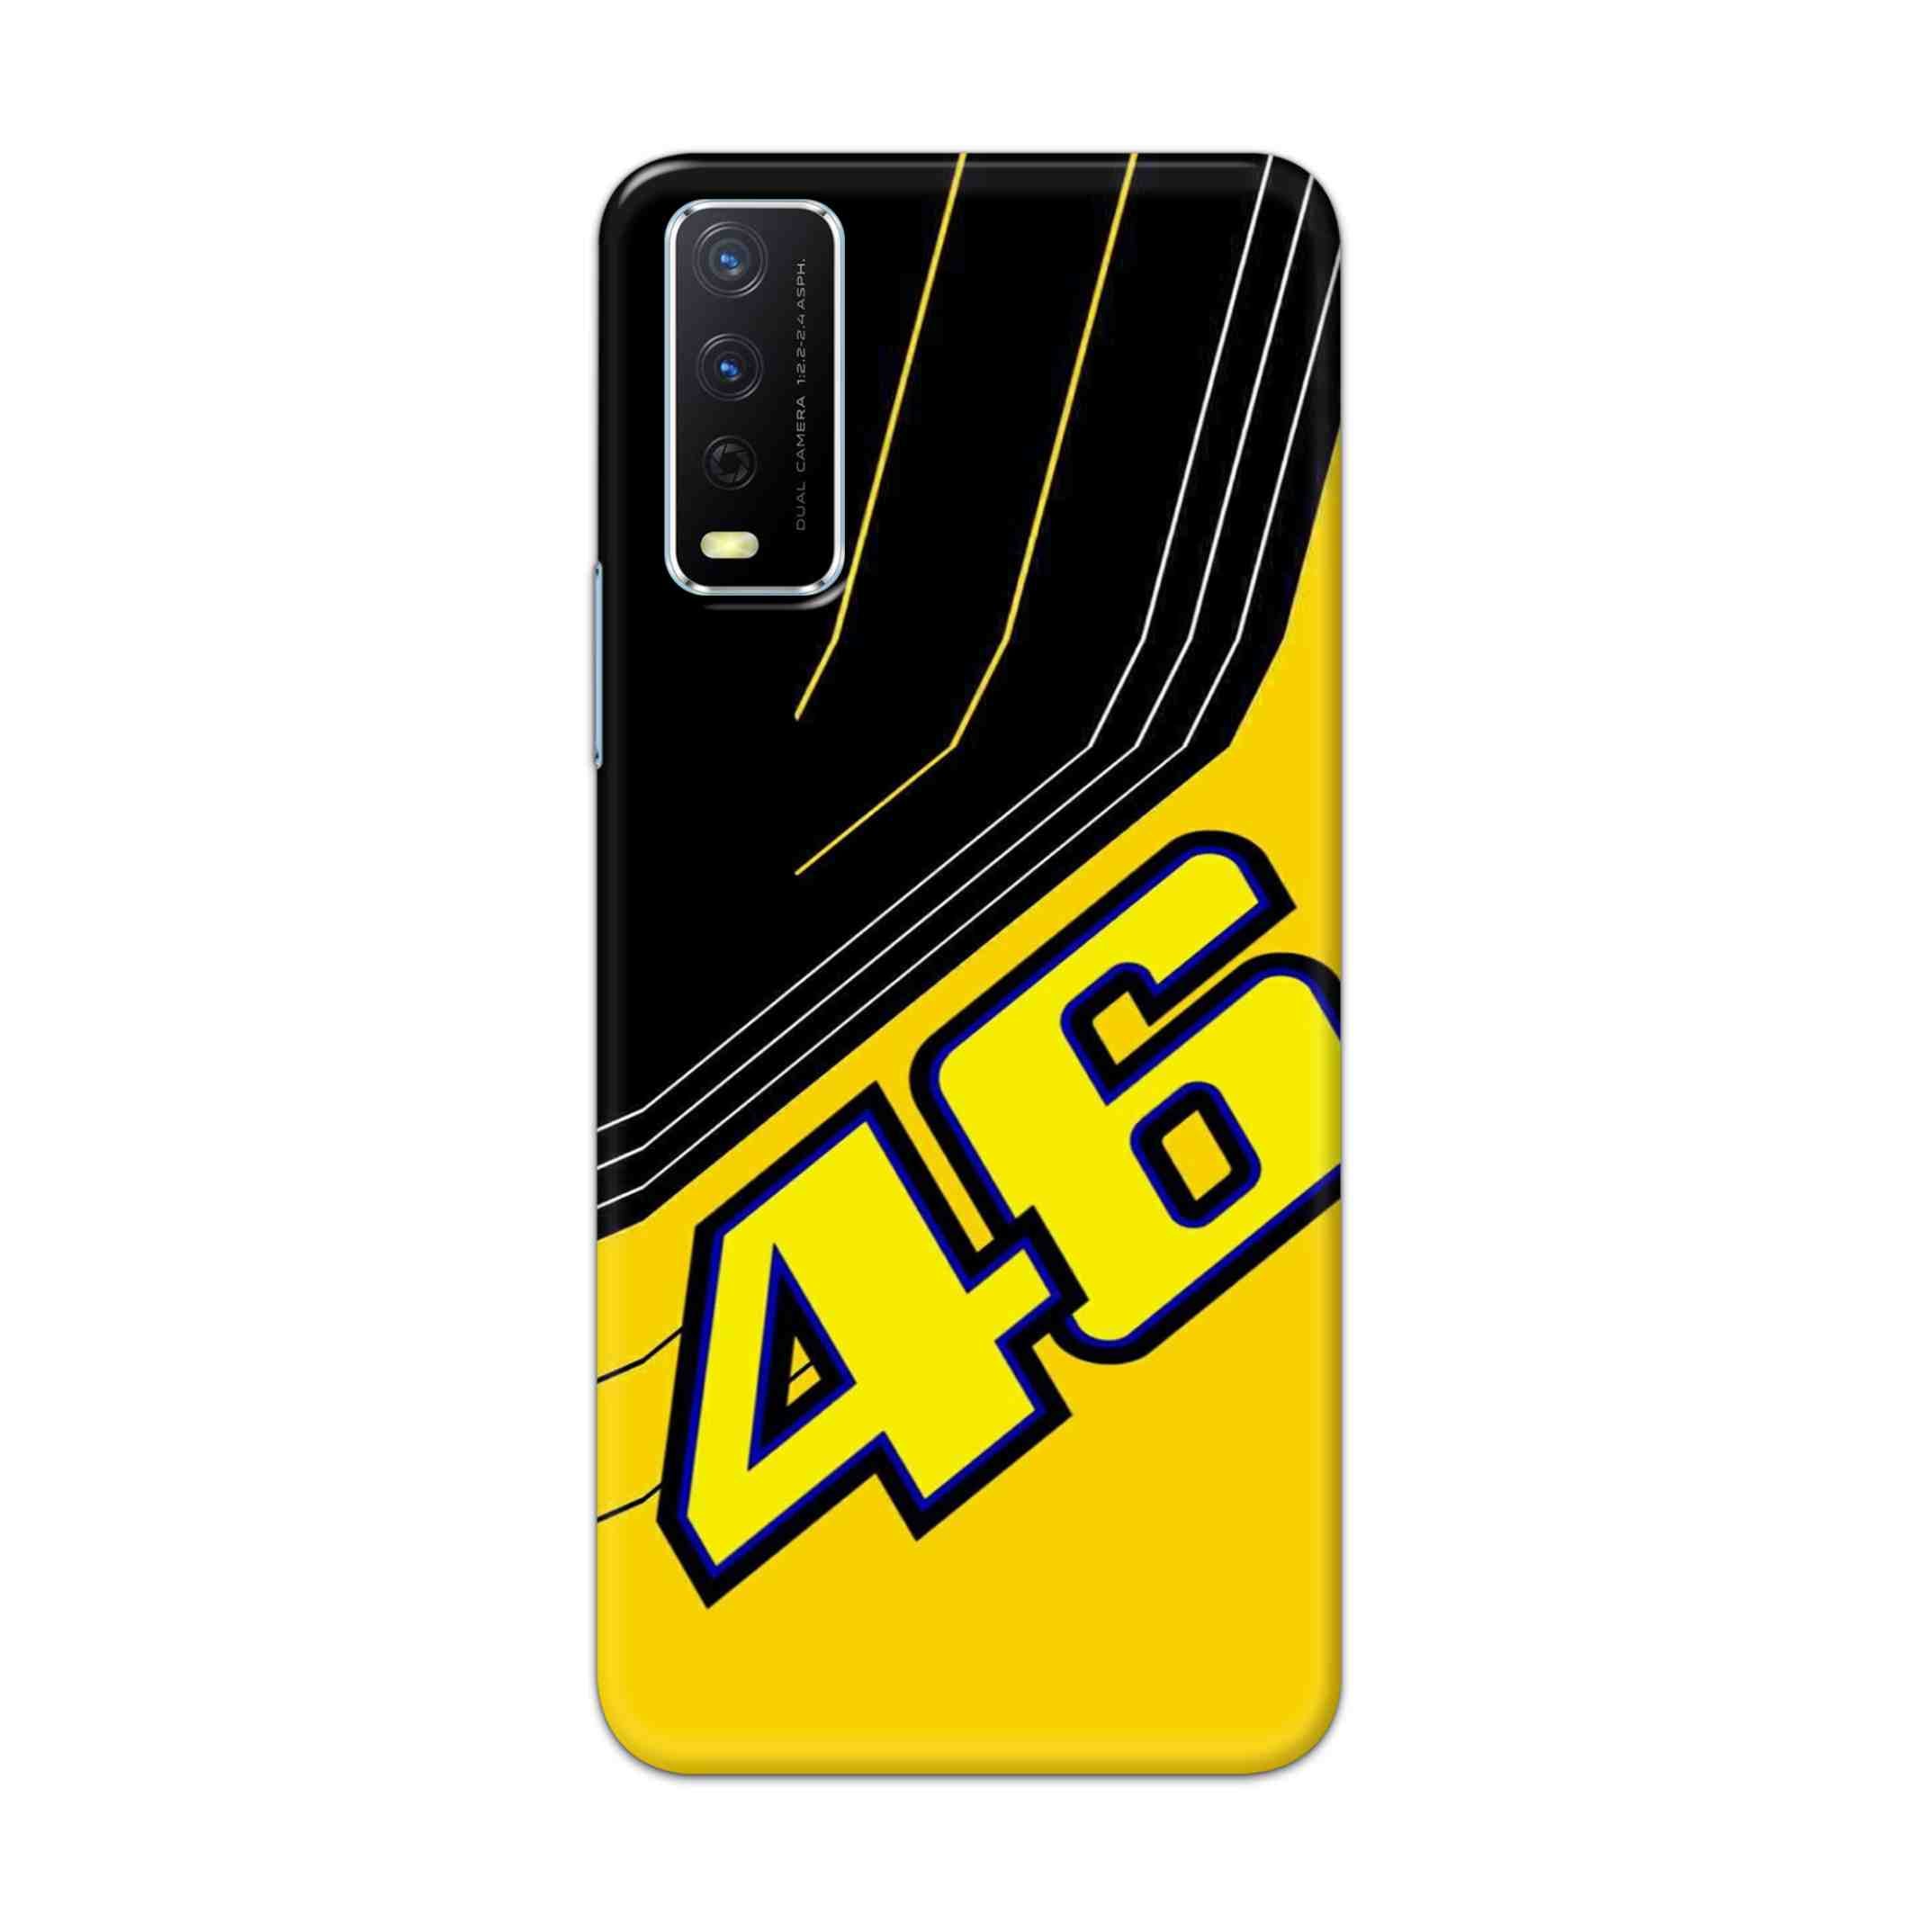 Buy 46 Hard Back Mobile Phone Case Cover For Vivo Y12s Online